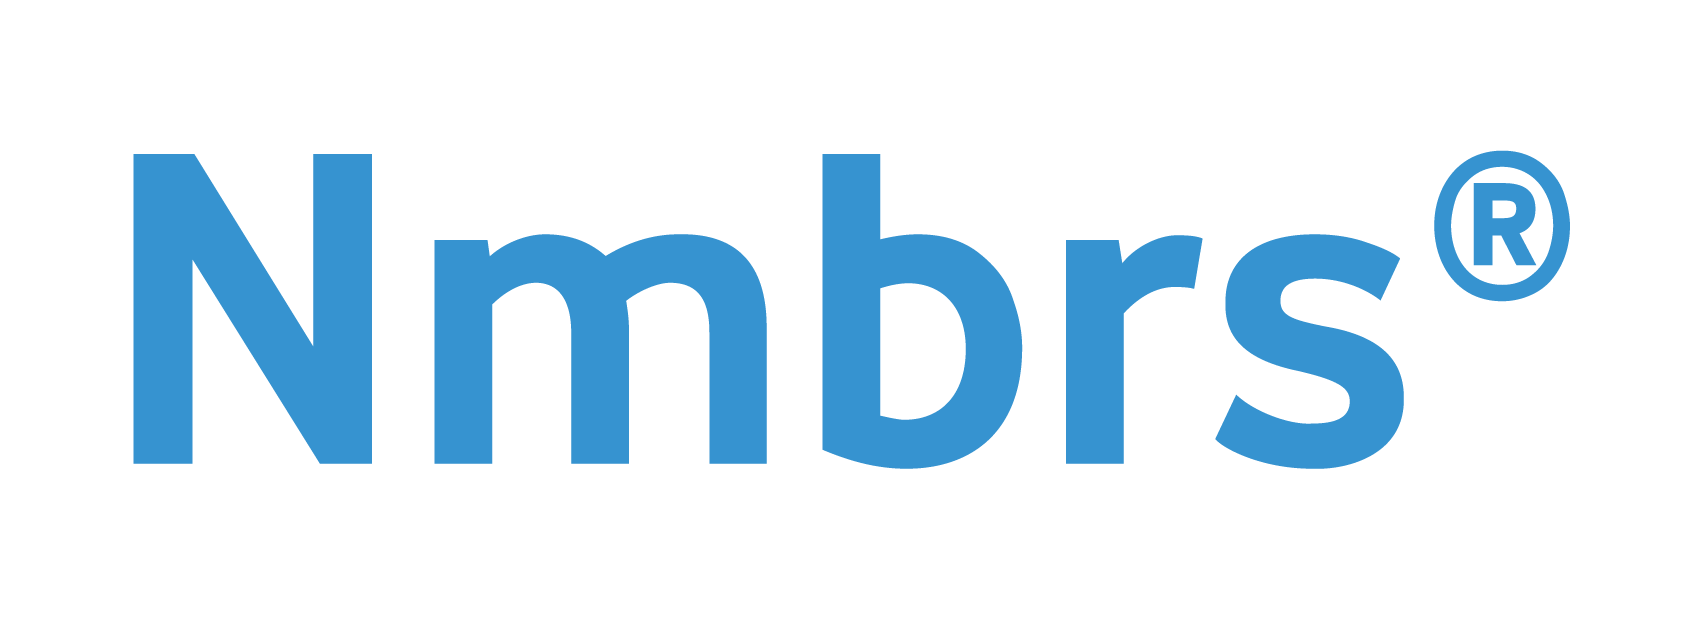 nmbrs_logo_blue-4